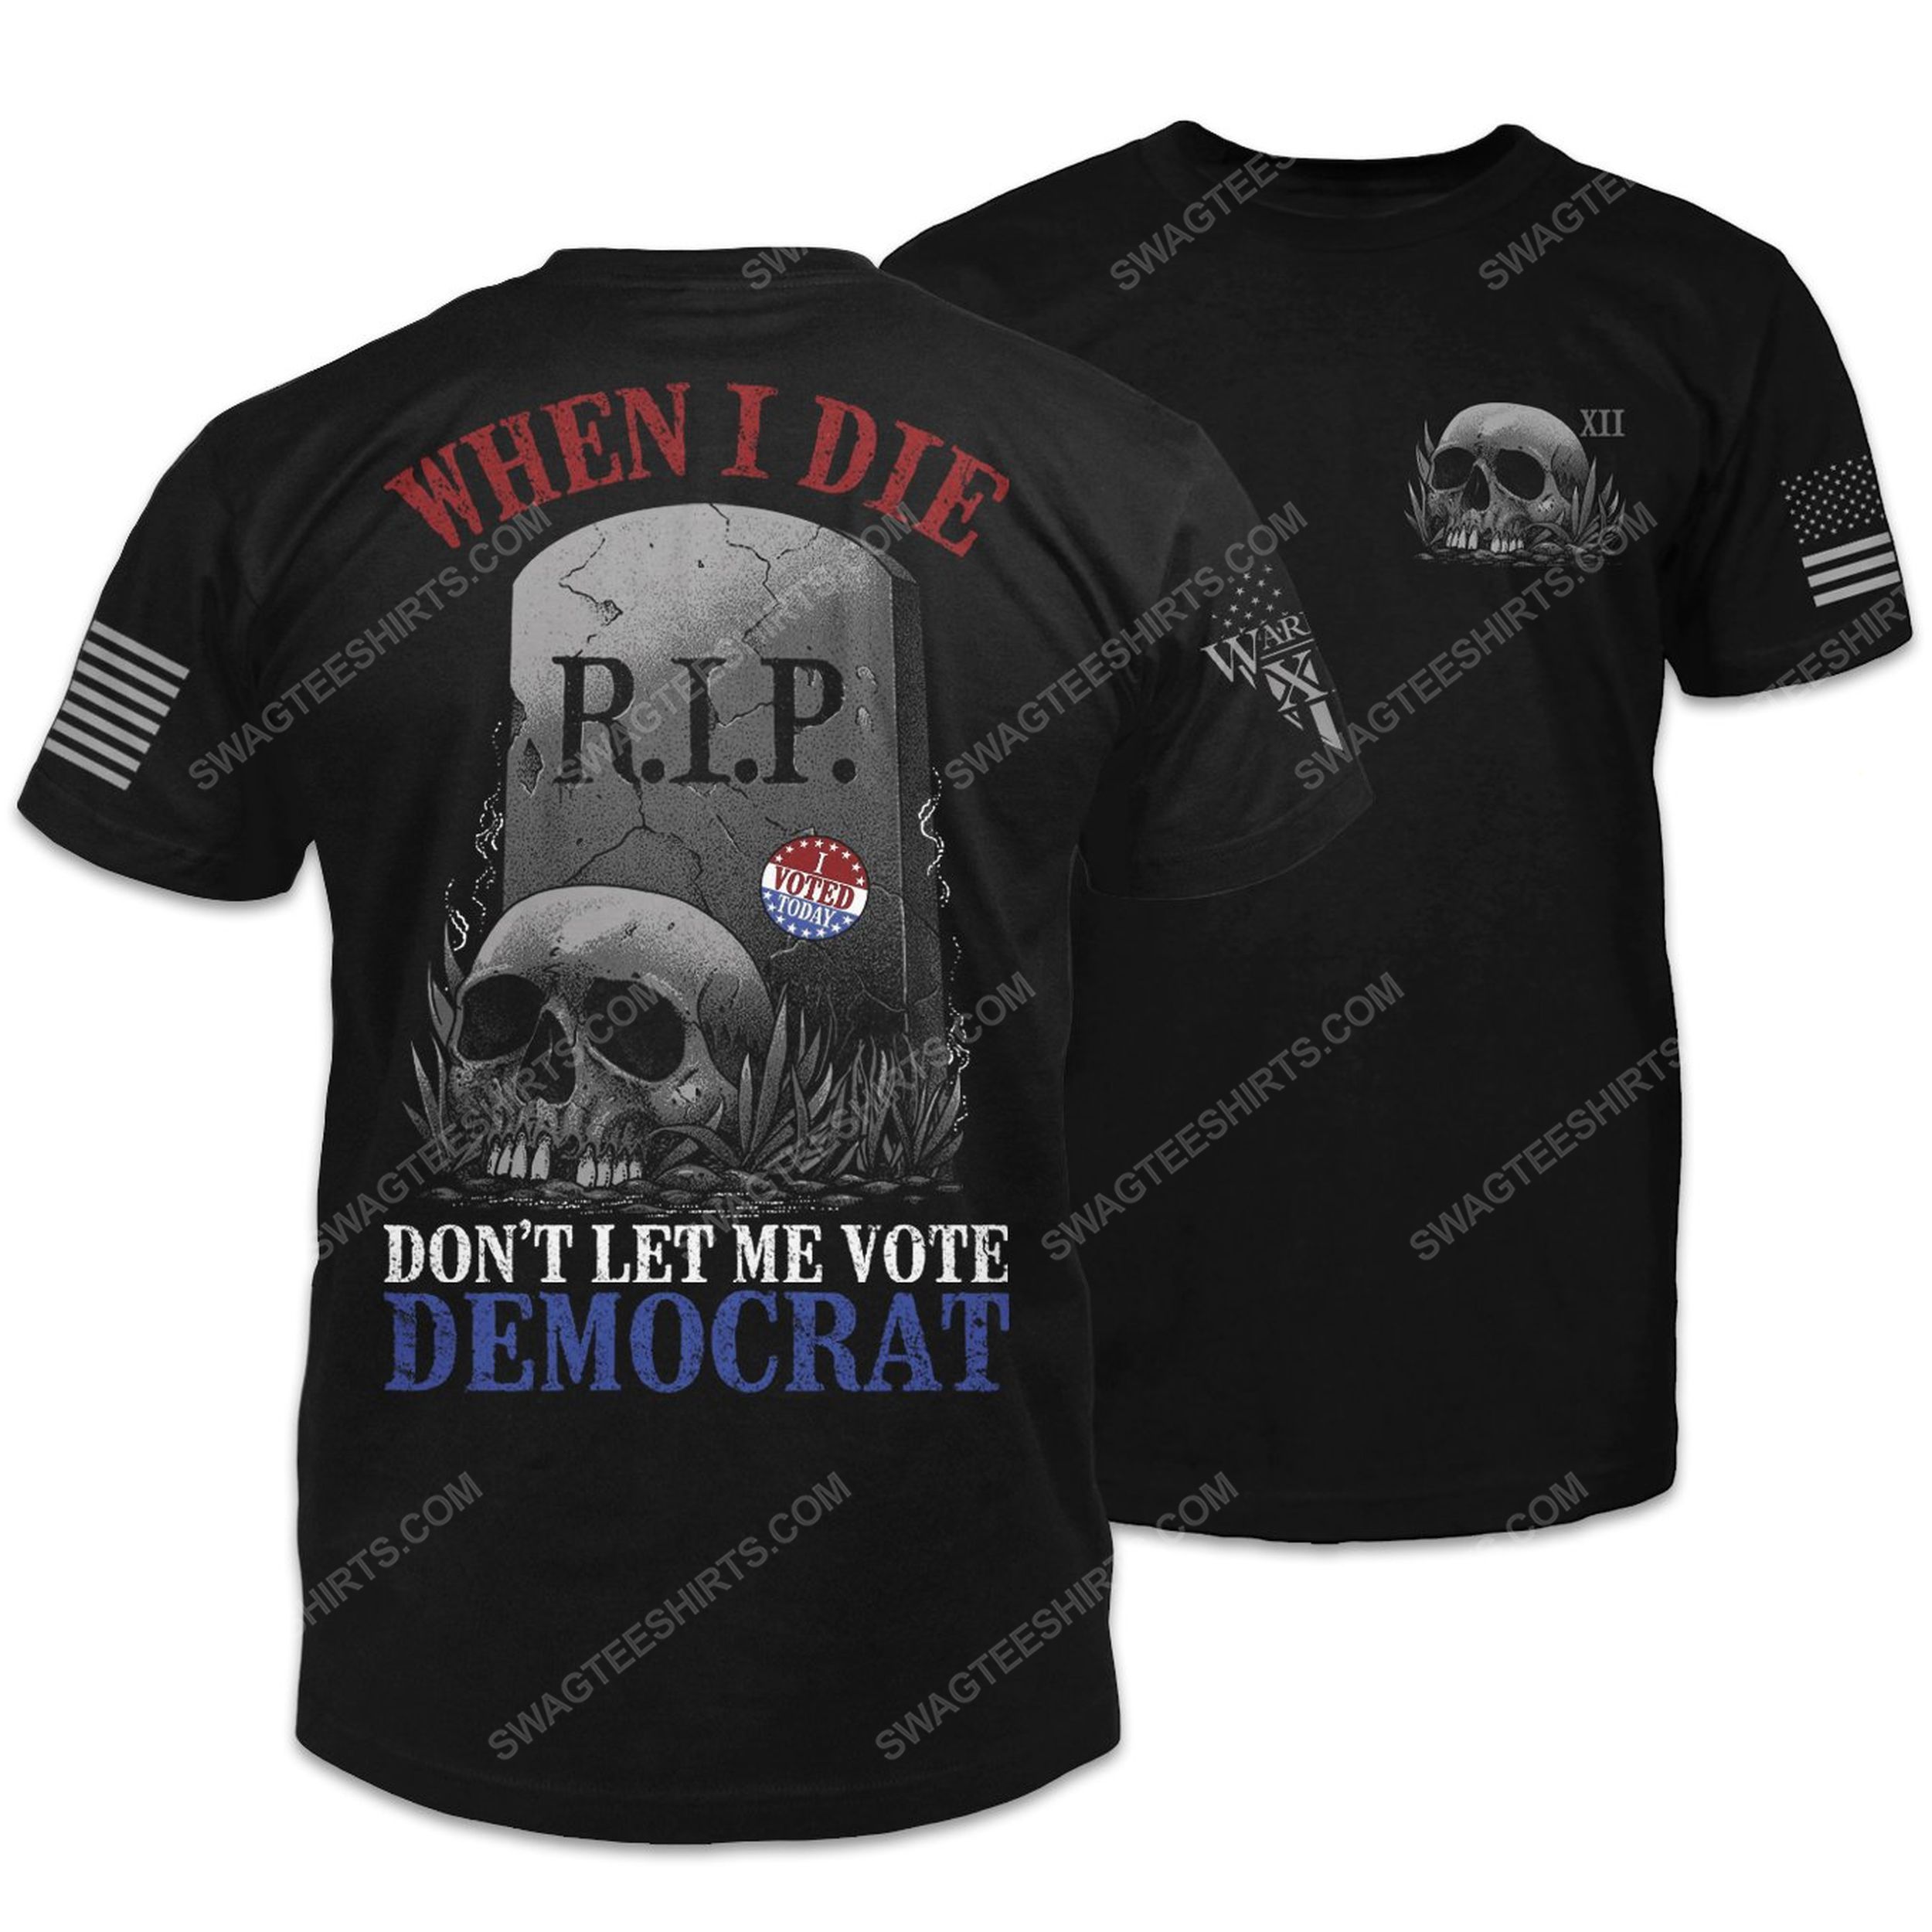 [special edition] When i die don’t let me vote democrat politics shirt- maria